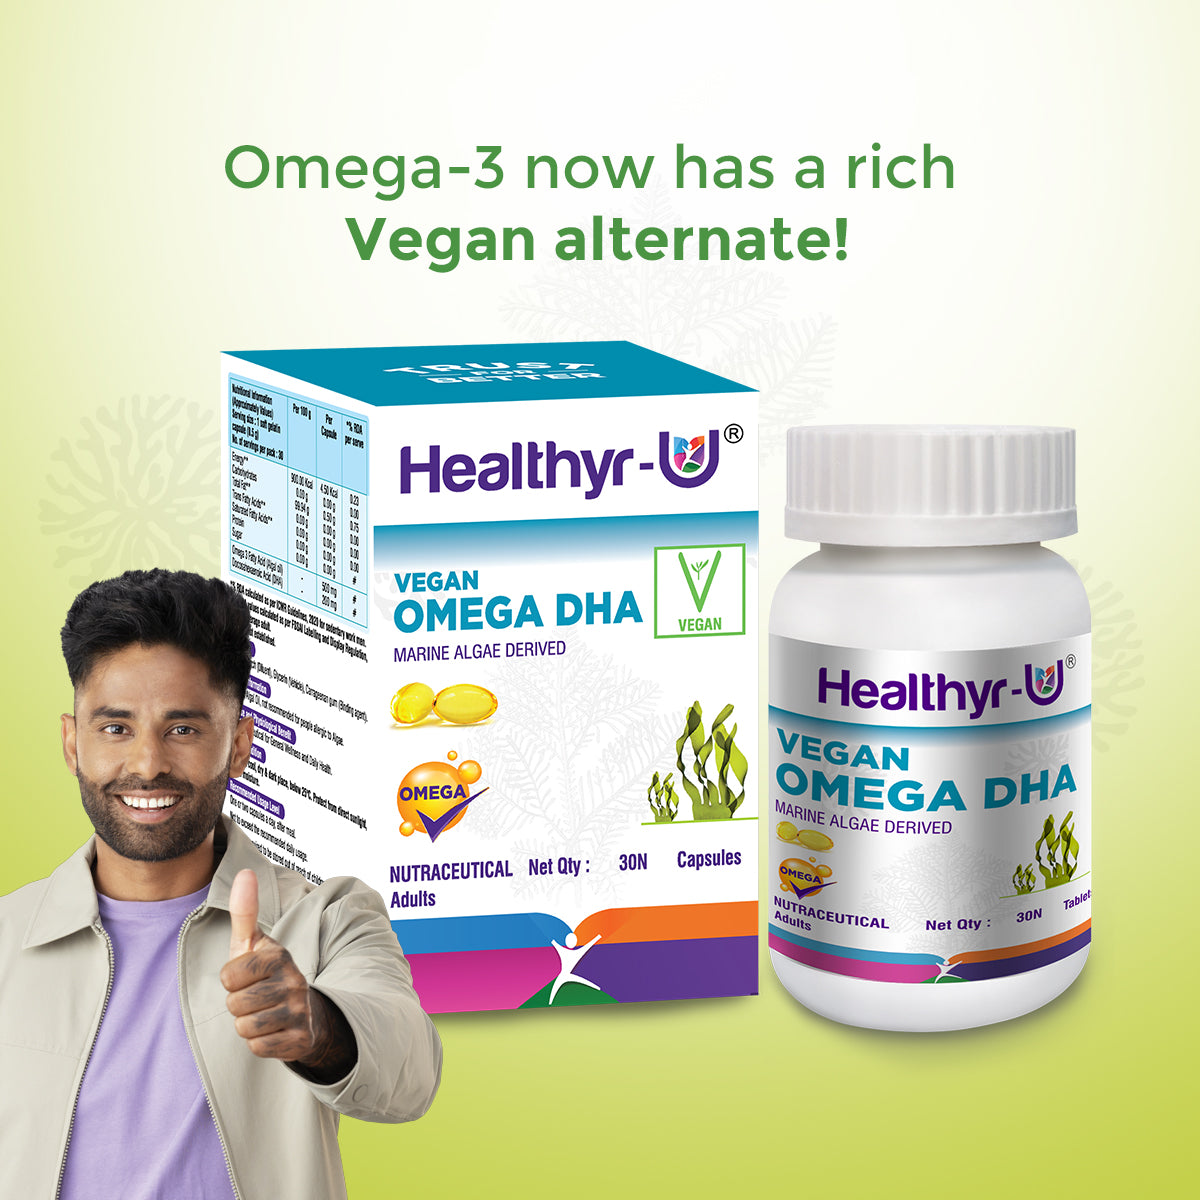 Vegan-Omega-DHA-Healthyr-U-Omega-3-Now-has-a-rich-vegan-alternate